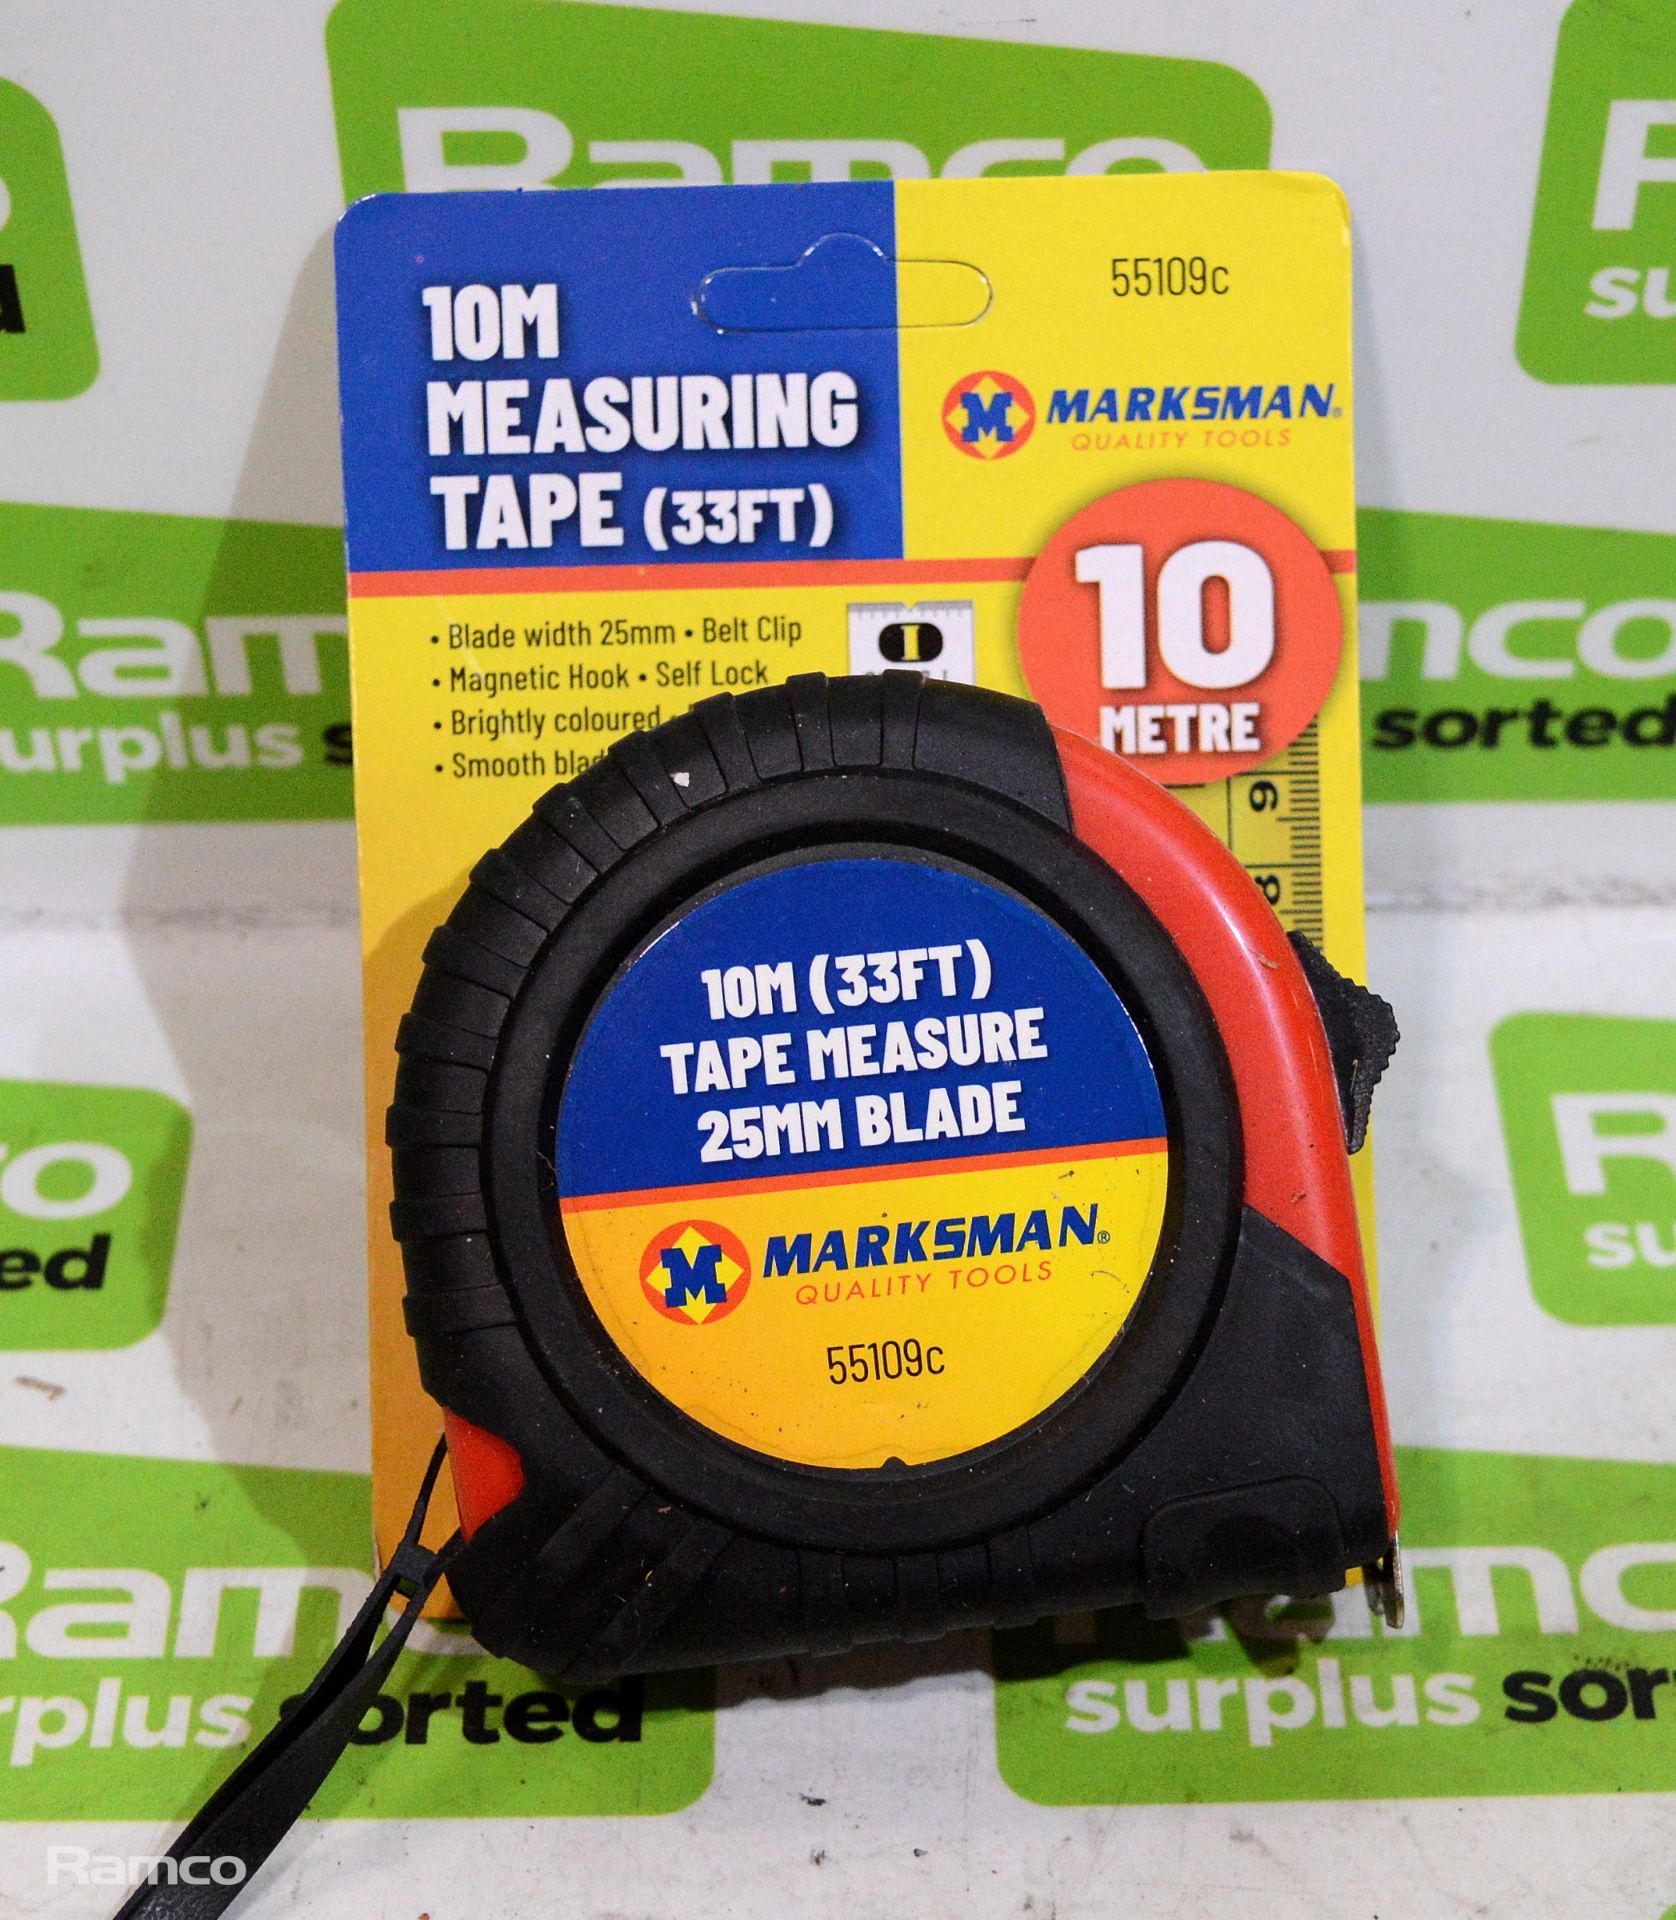 3x Marksman 5m tape measures, 3x Marksman 10m tape measures - Image 2 of 3